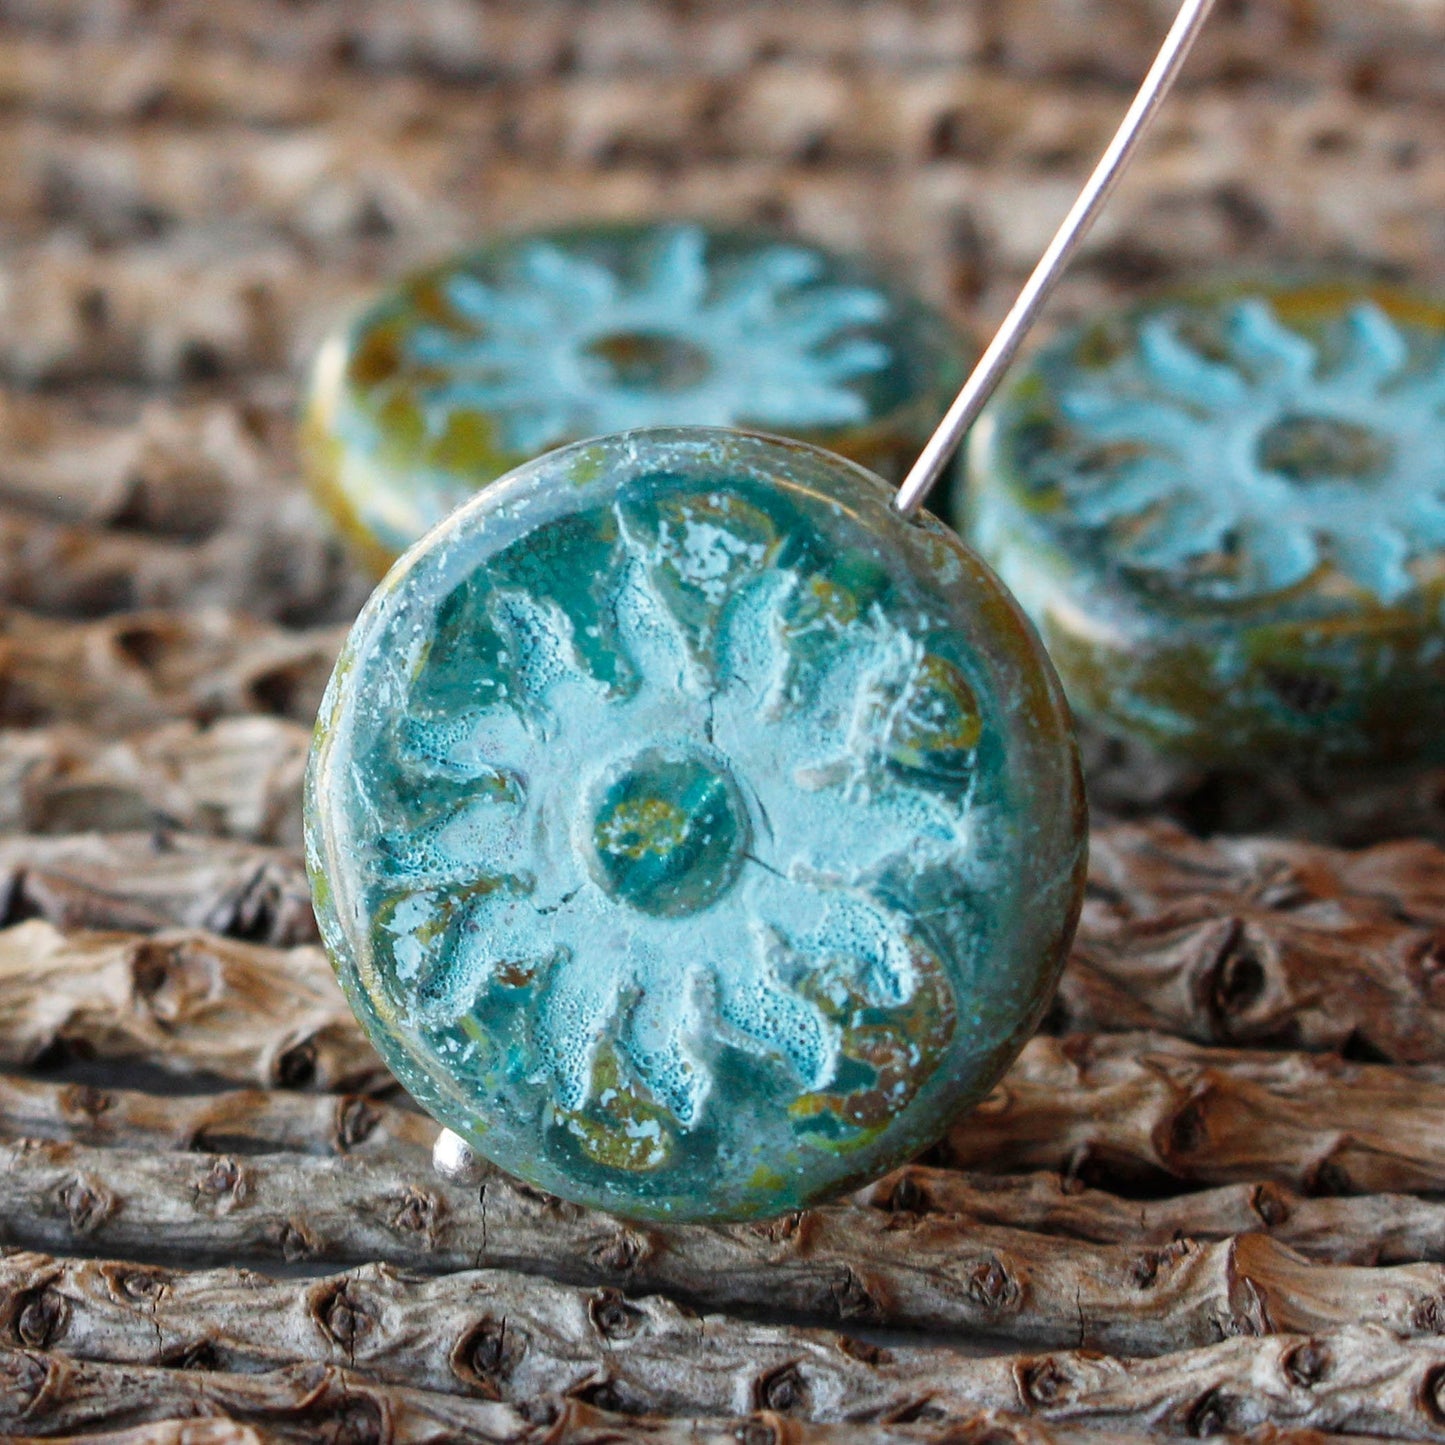 22mm Sun Coin Beads - Mixed Turquoise with Aqua Sun - 1 Bead